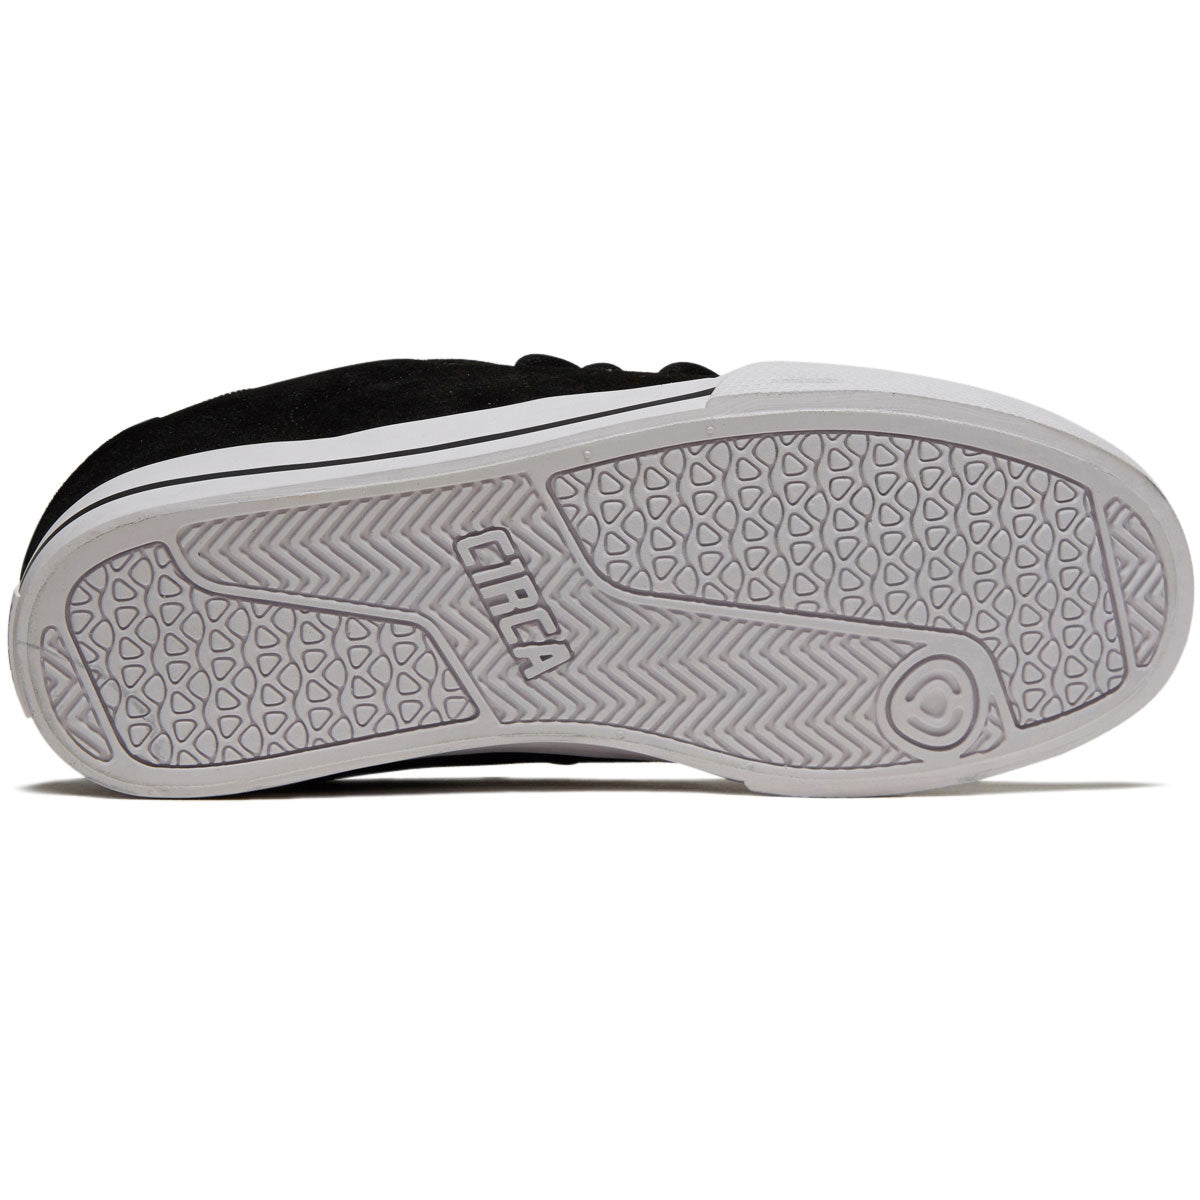 C1rca Al 50 Shoes - Worn Black/White image 4